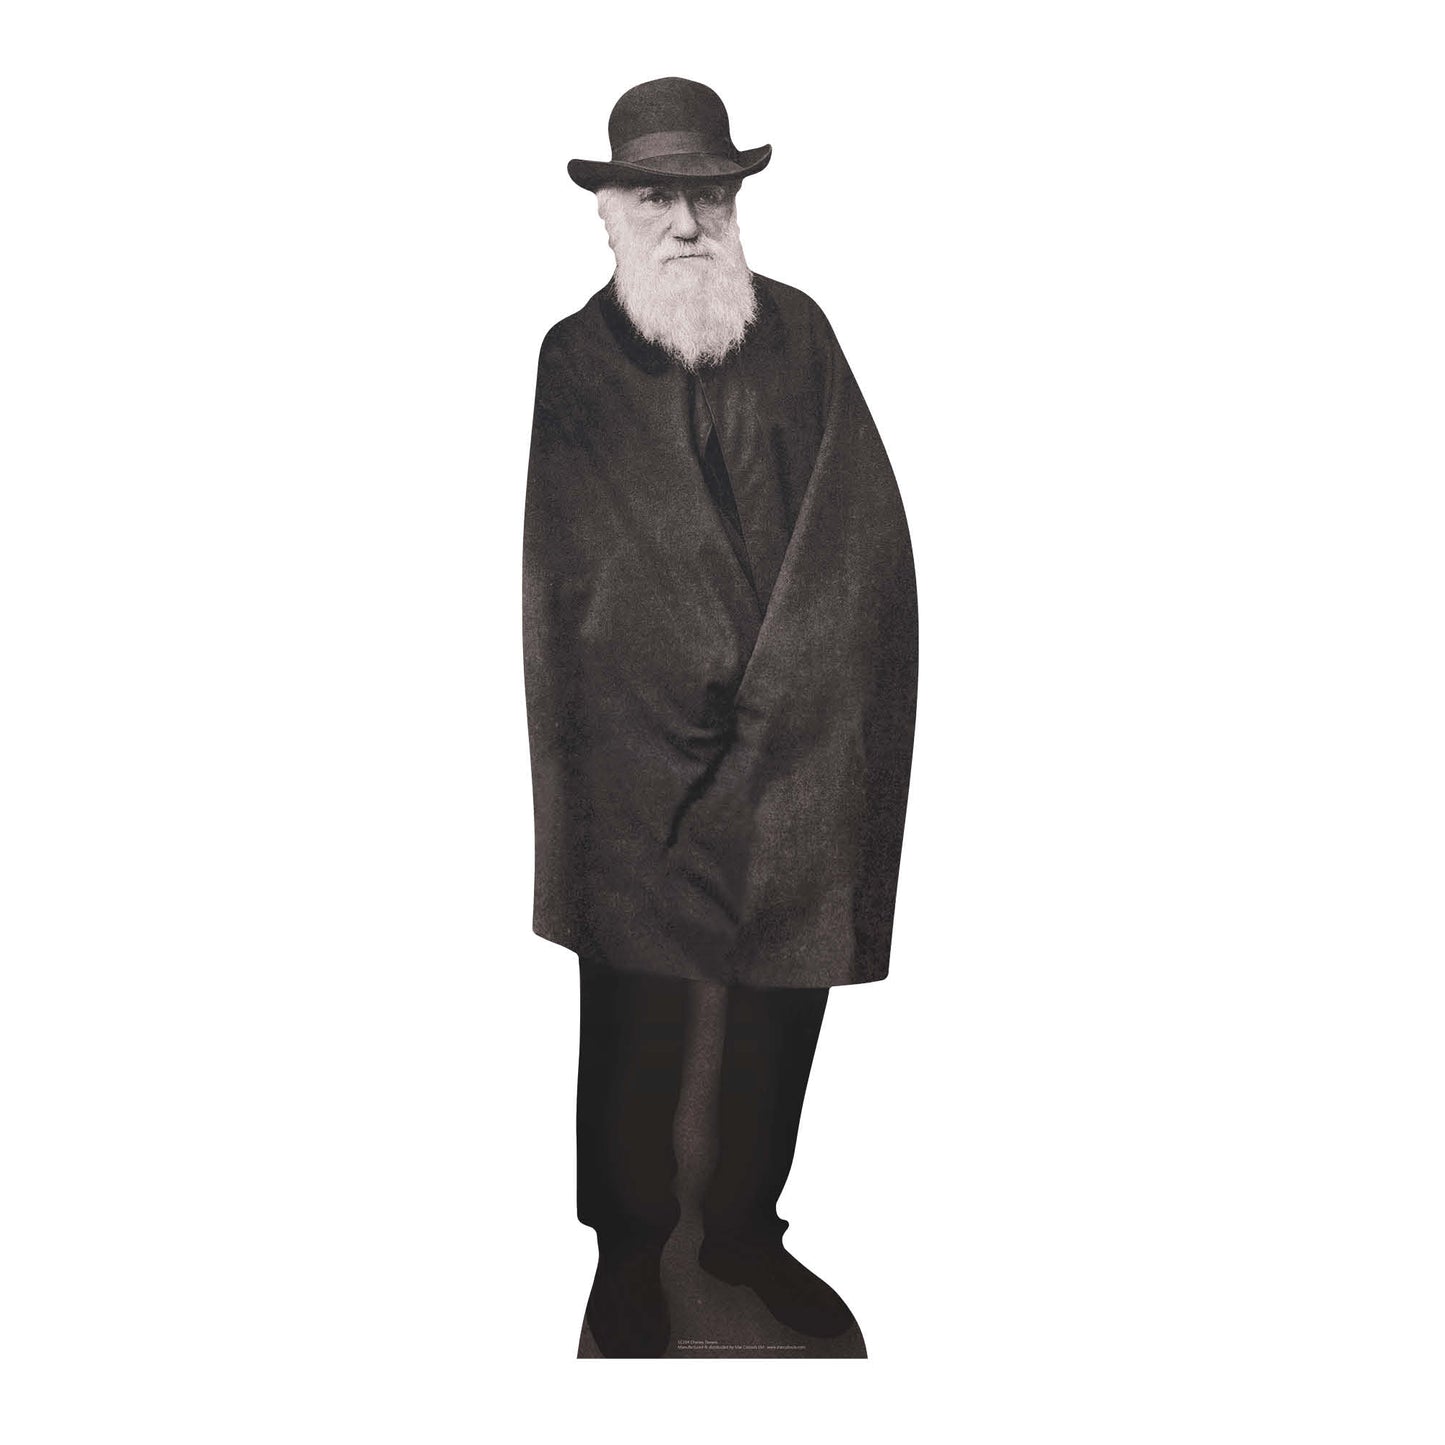 Charles Darwin Historical Figure Cardboard Cutout Lifesize